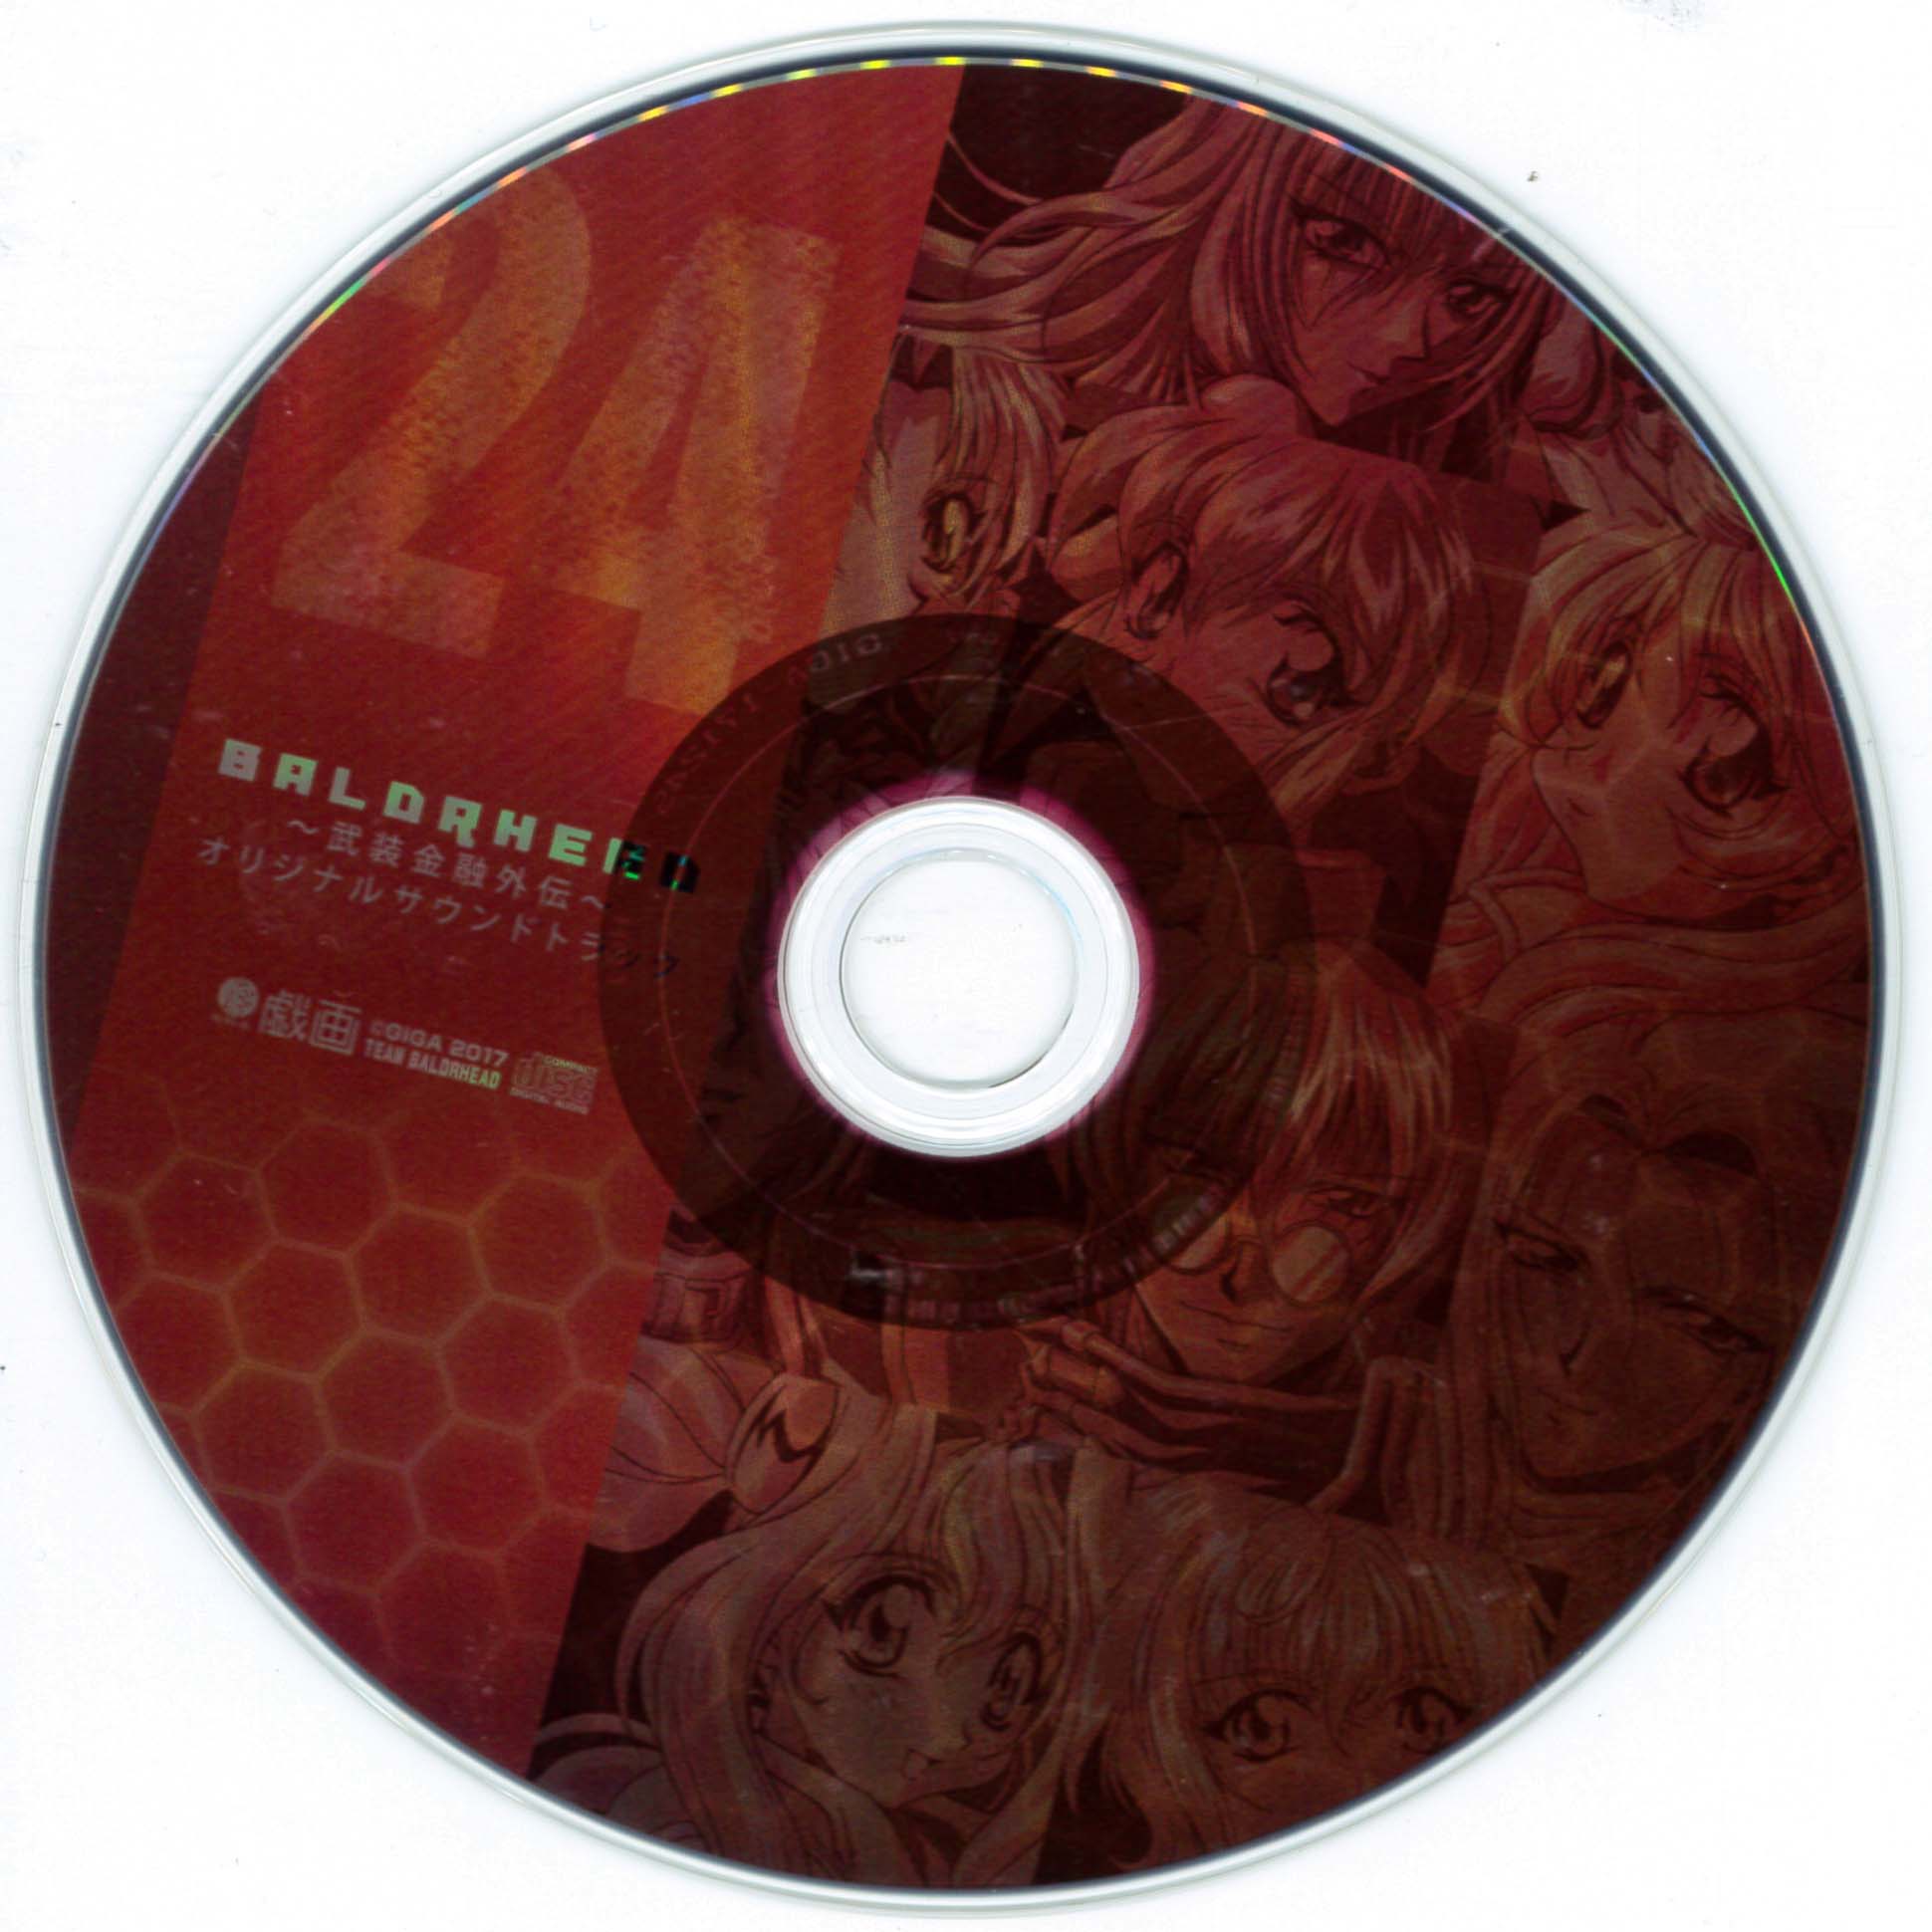 BALDR MASTERPIECE CHRONICLE 予約特典CD 戯画 - テレビゲーム